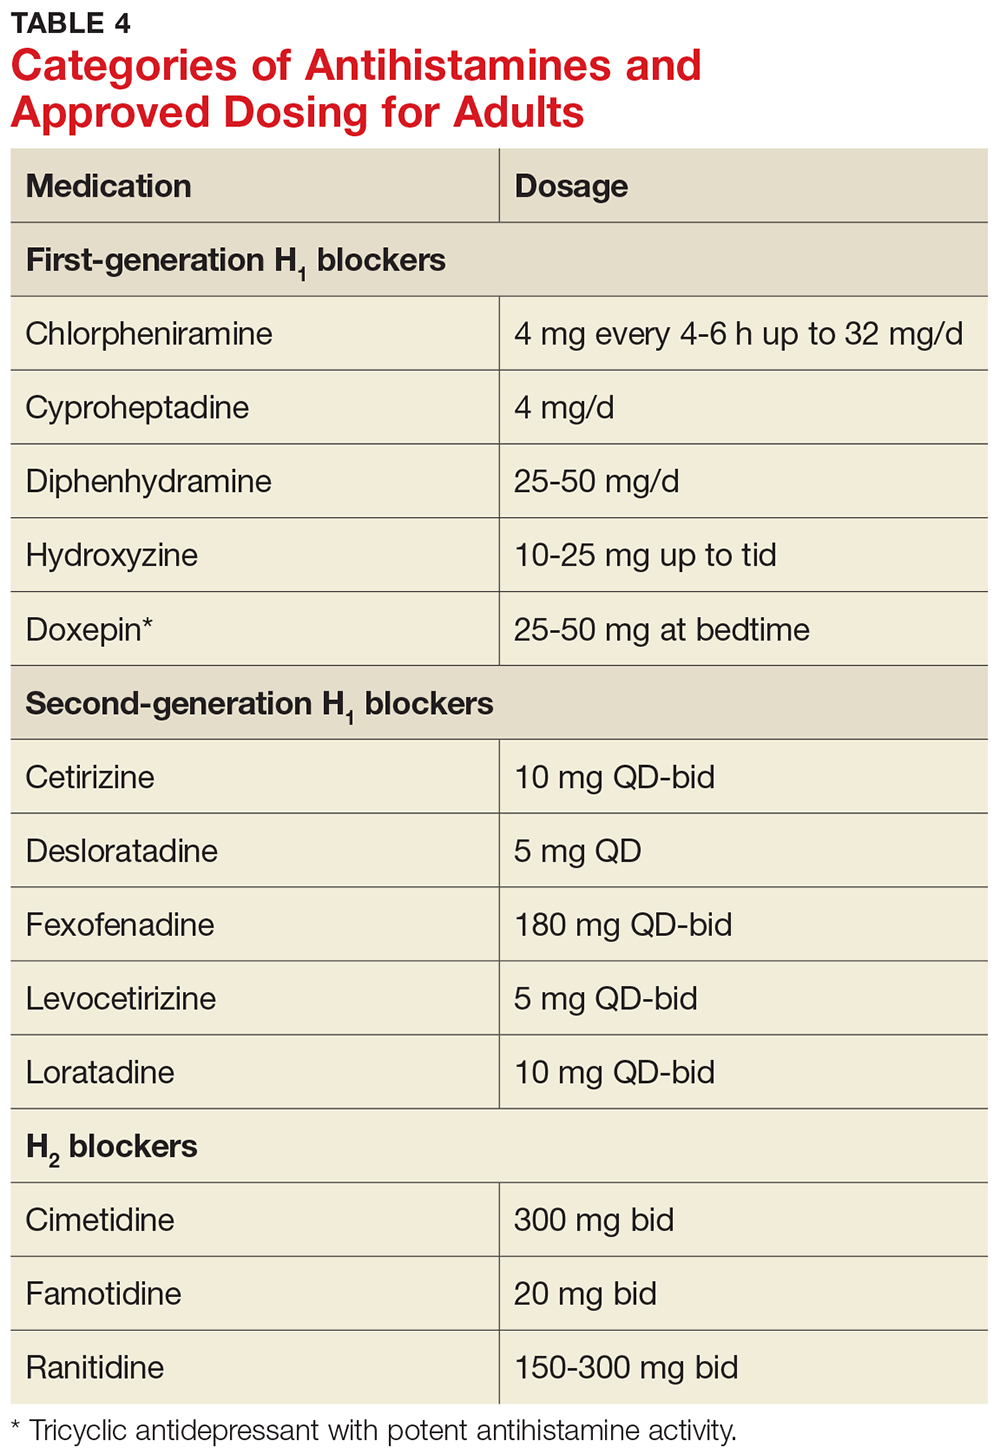 Classification Of Antihistamine Drugs